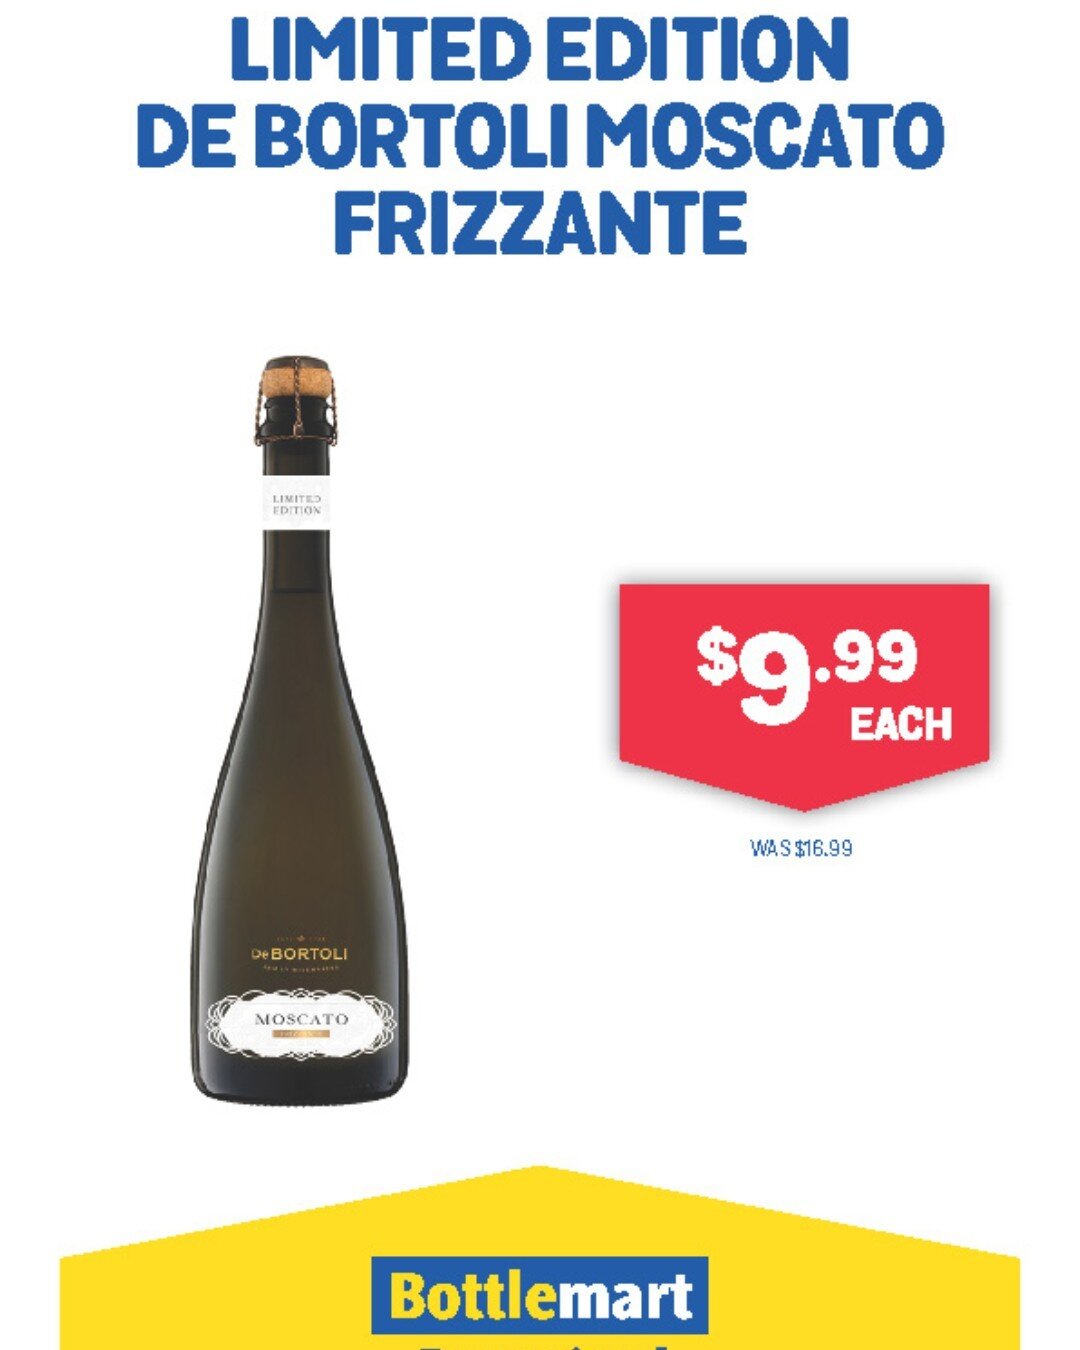 Happy Easter 🥂
Enjoy some bubbles with a bottle of limited edition DeBortoli Moscato. 

#bottleshop #debortoli #perthdrinks #bottlemart